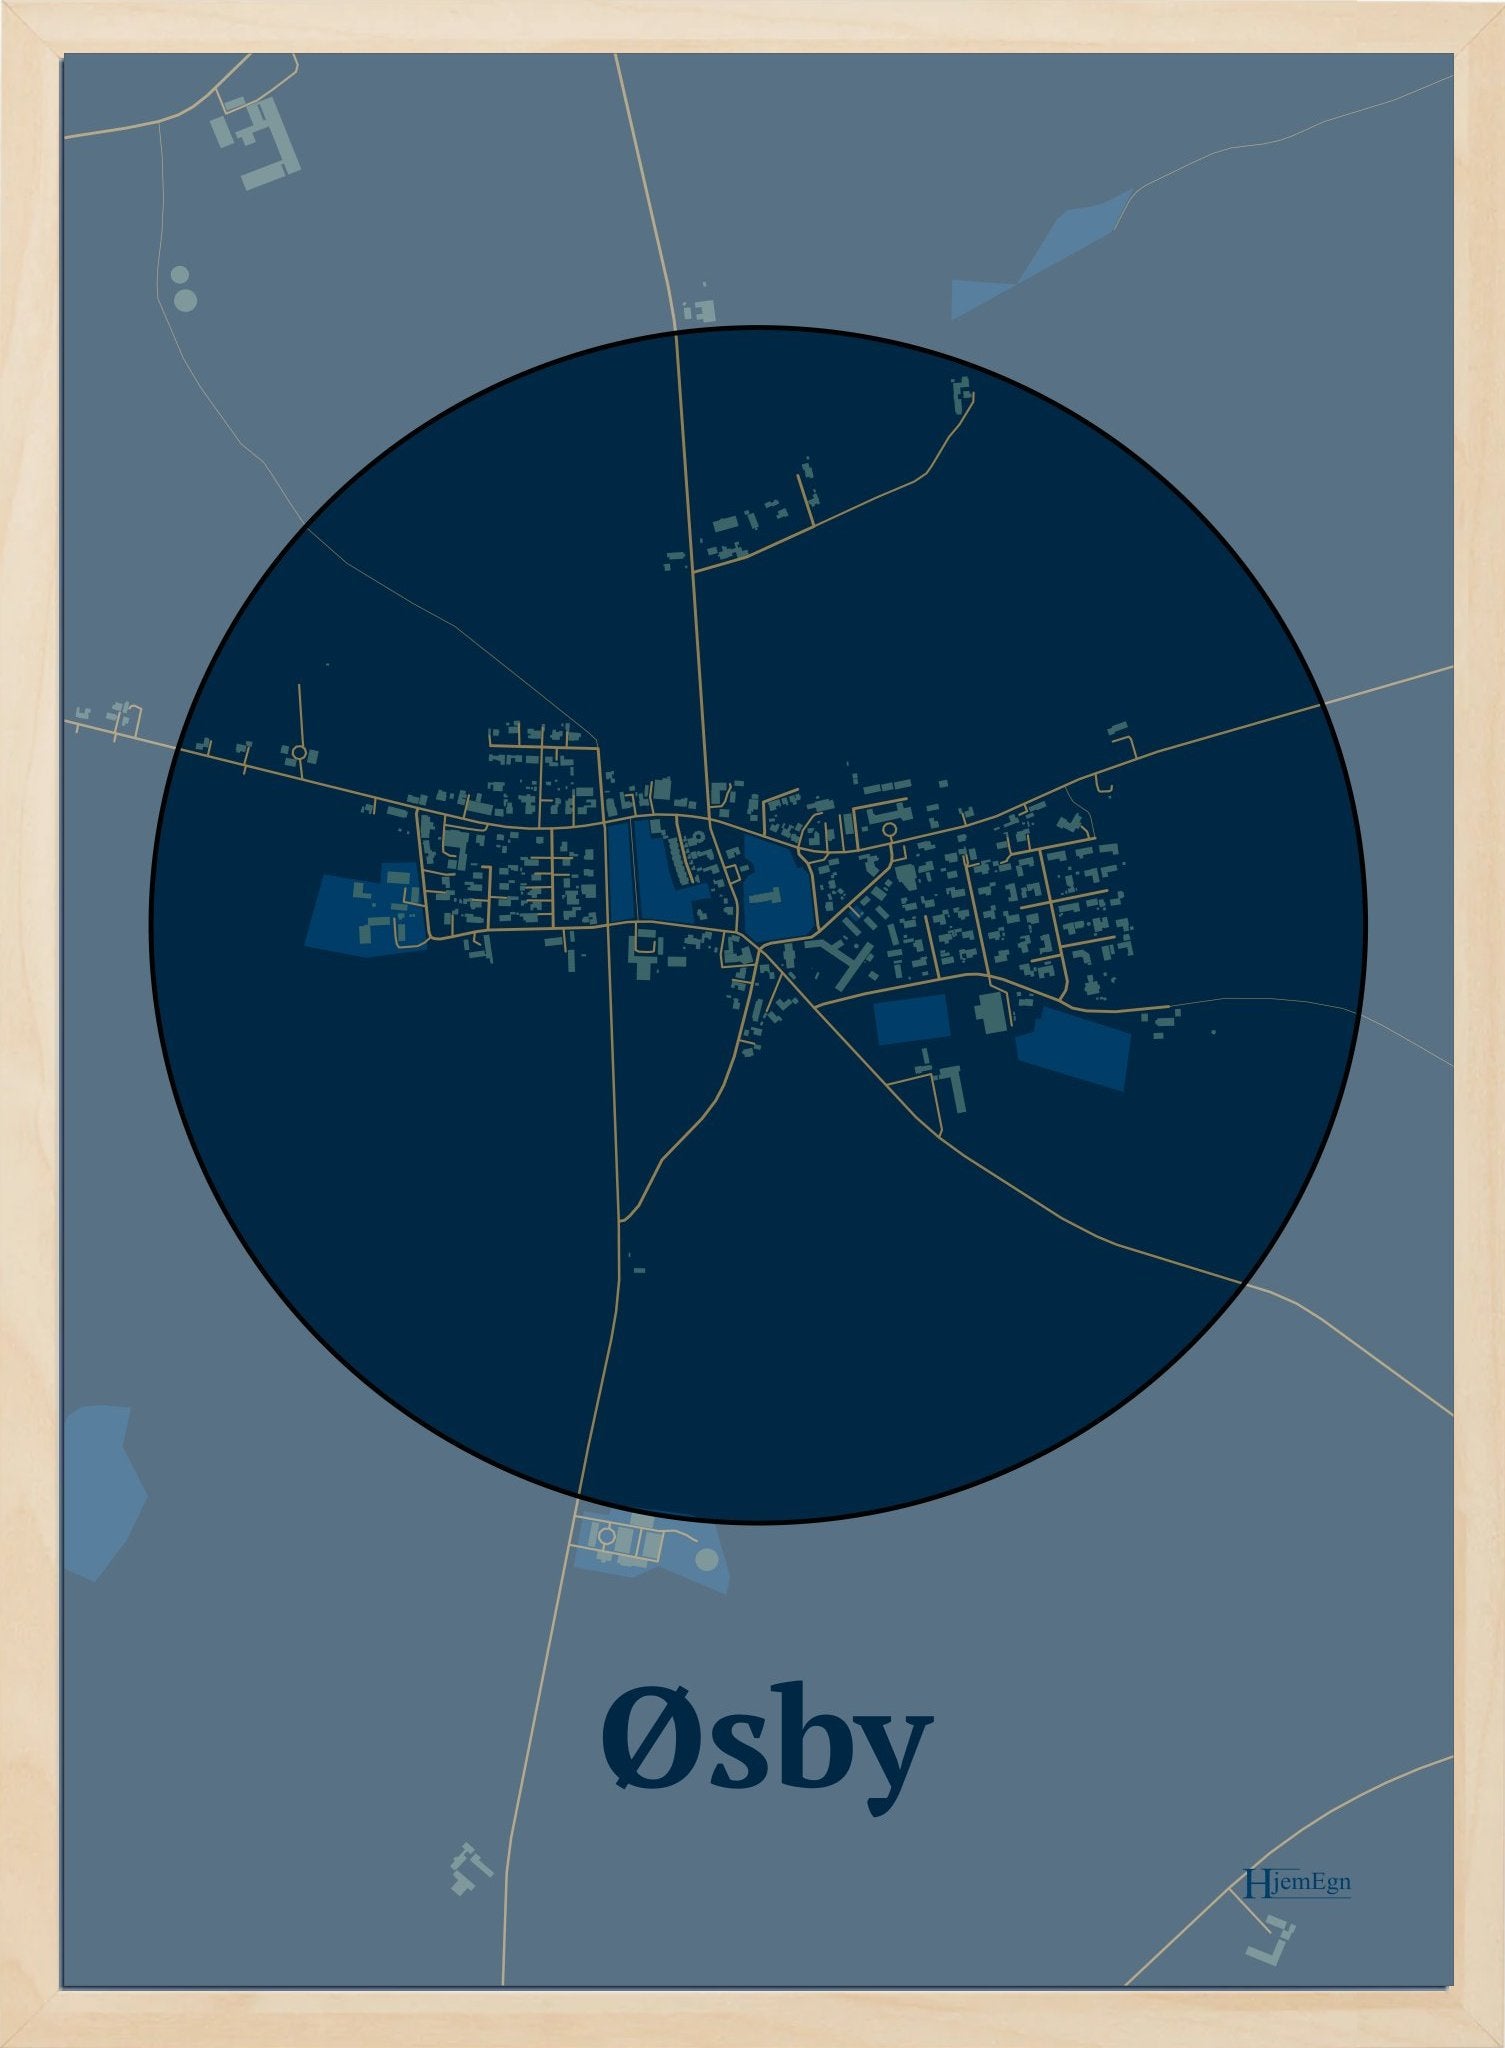 Øsby plakat i farve mørk blå og HjemEgn.dk design centrum. Design bykort for Øsby